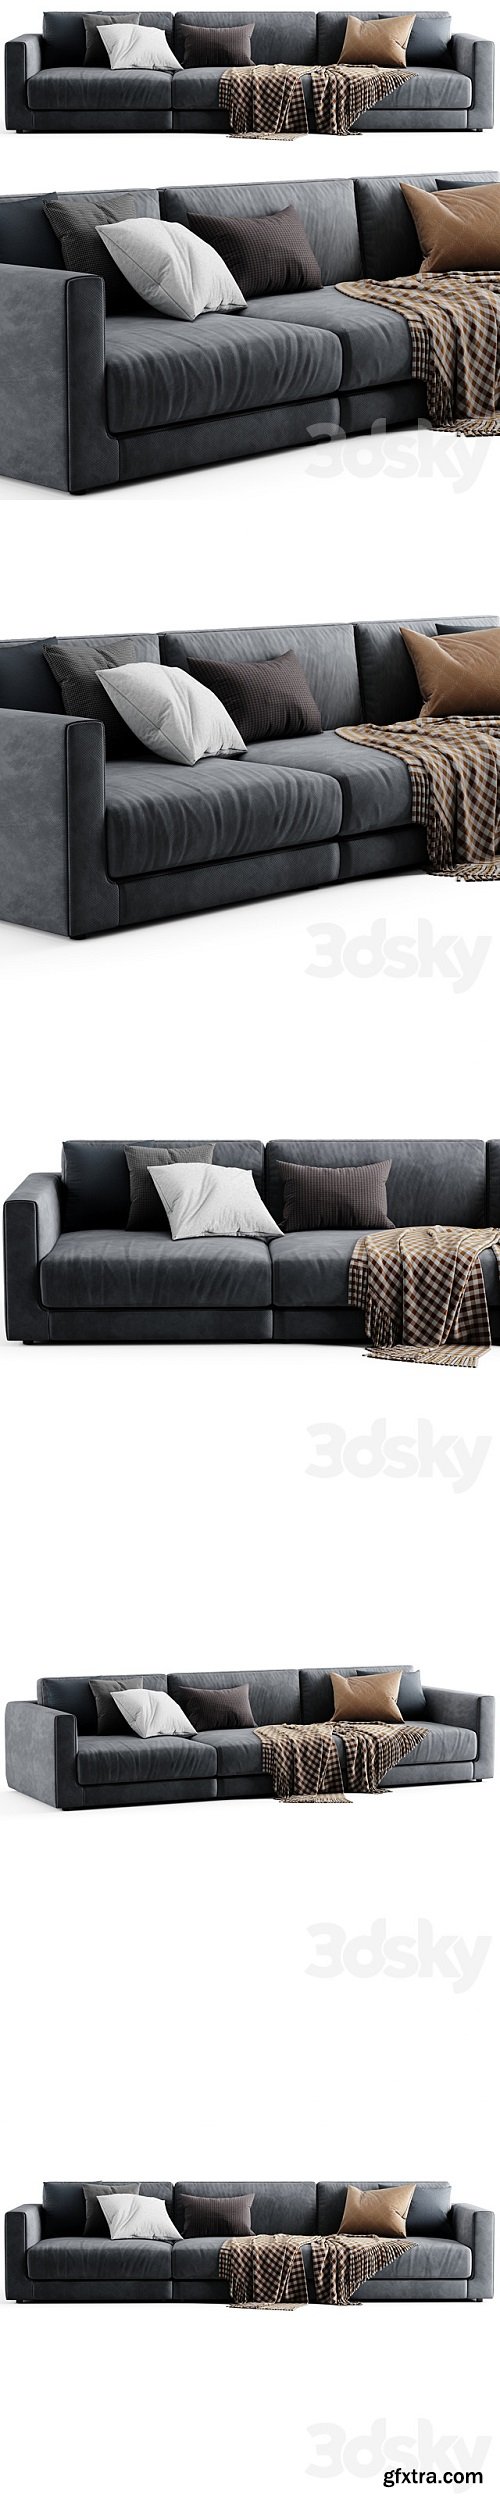 Poliform bristol sofa